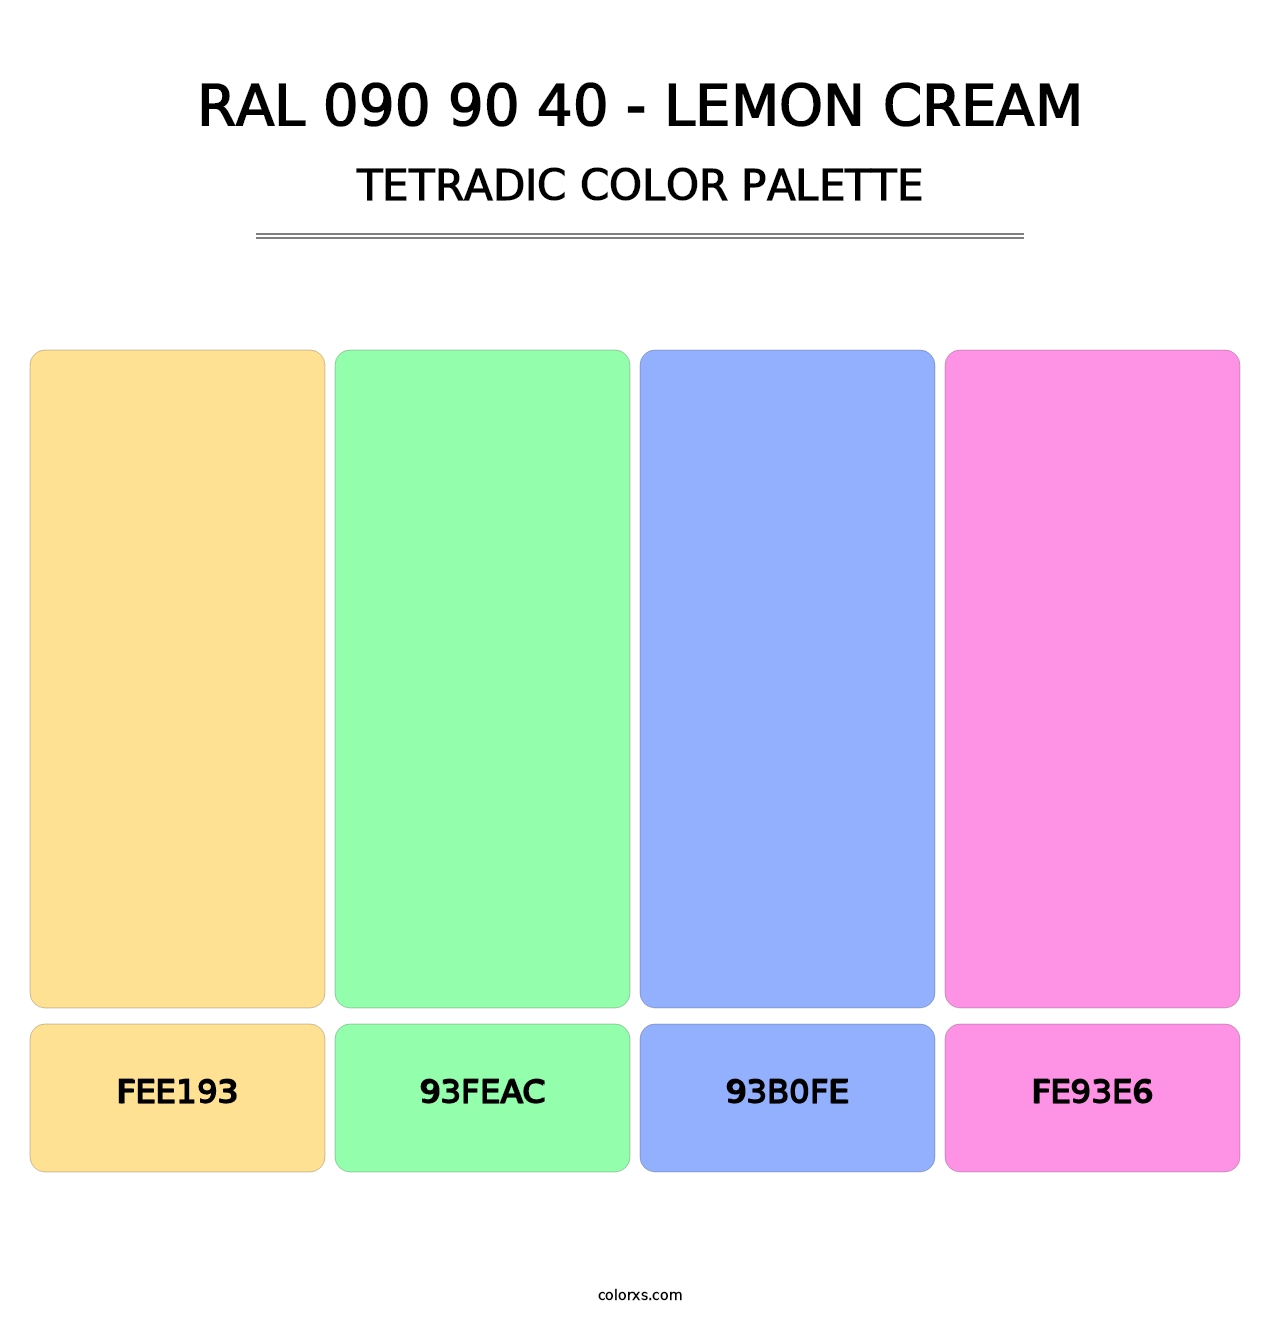 RAL 090 90 40 - Lemon Cream - Tetradic Color Palette